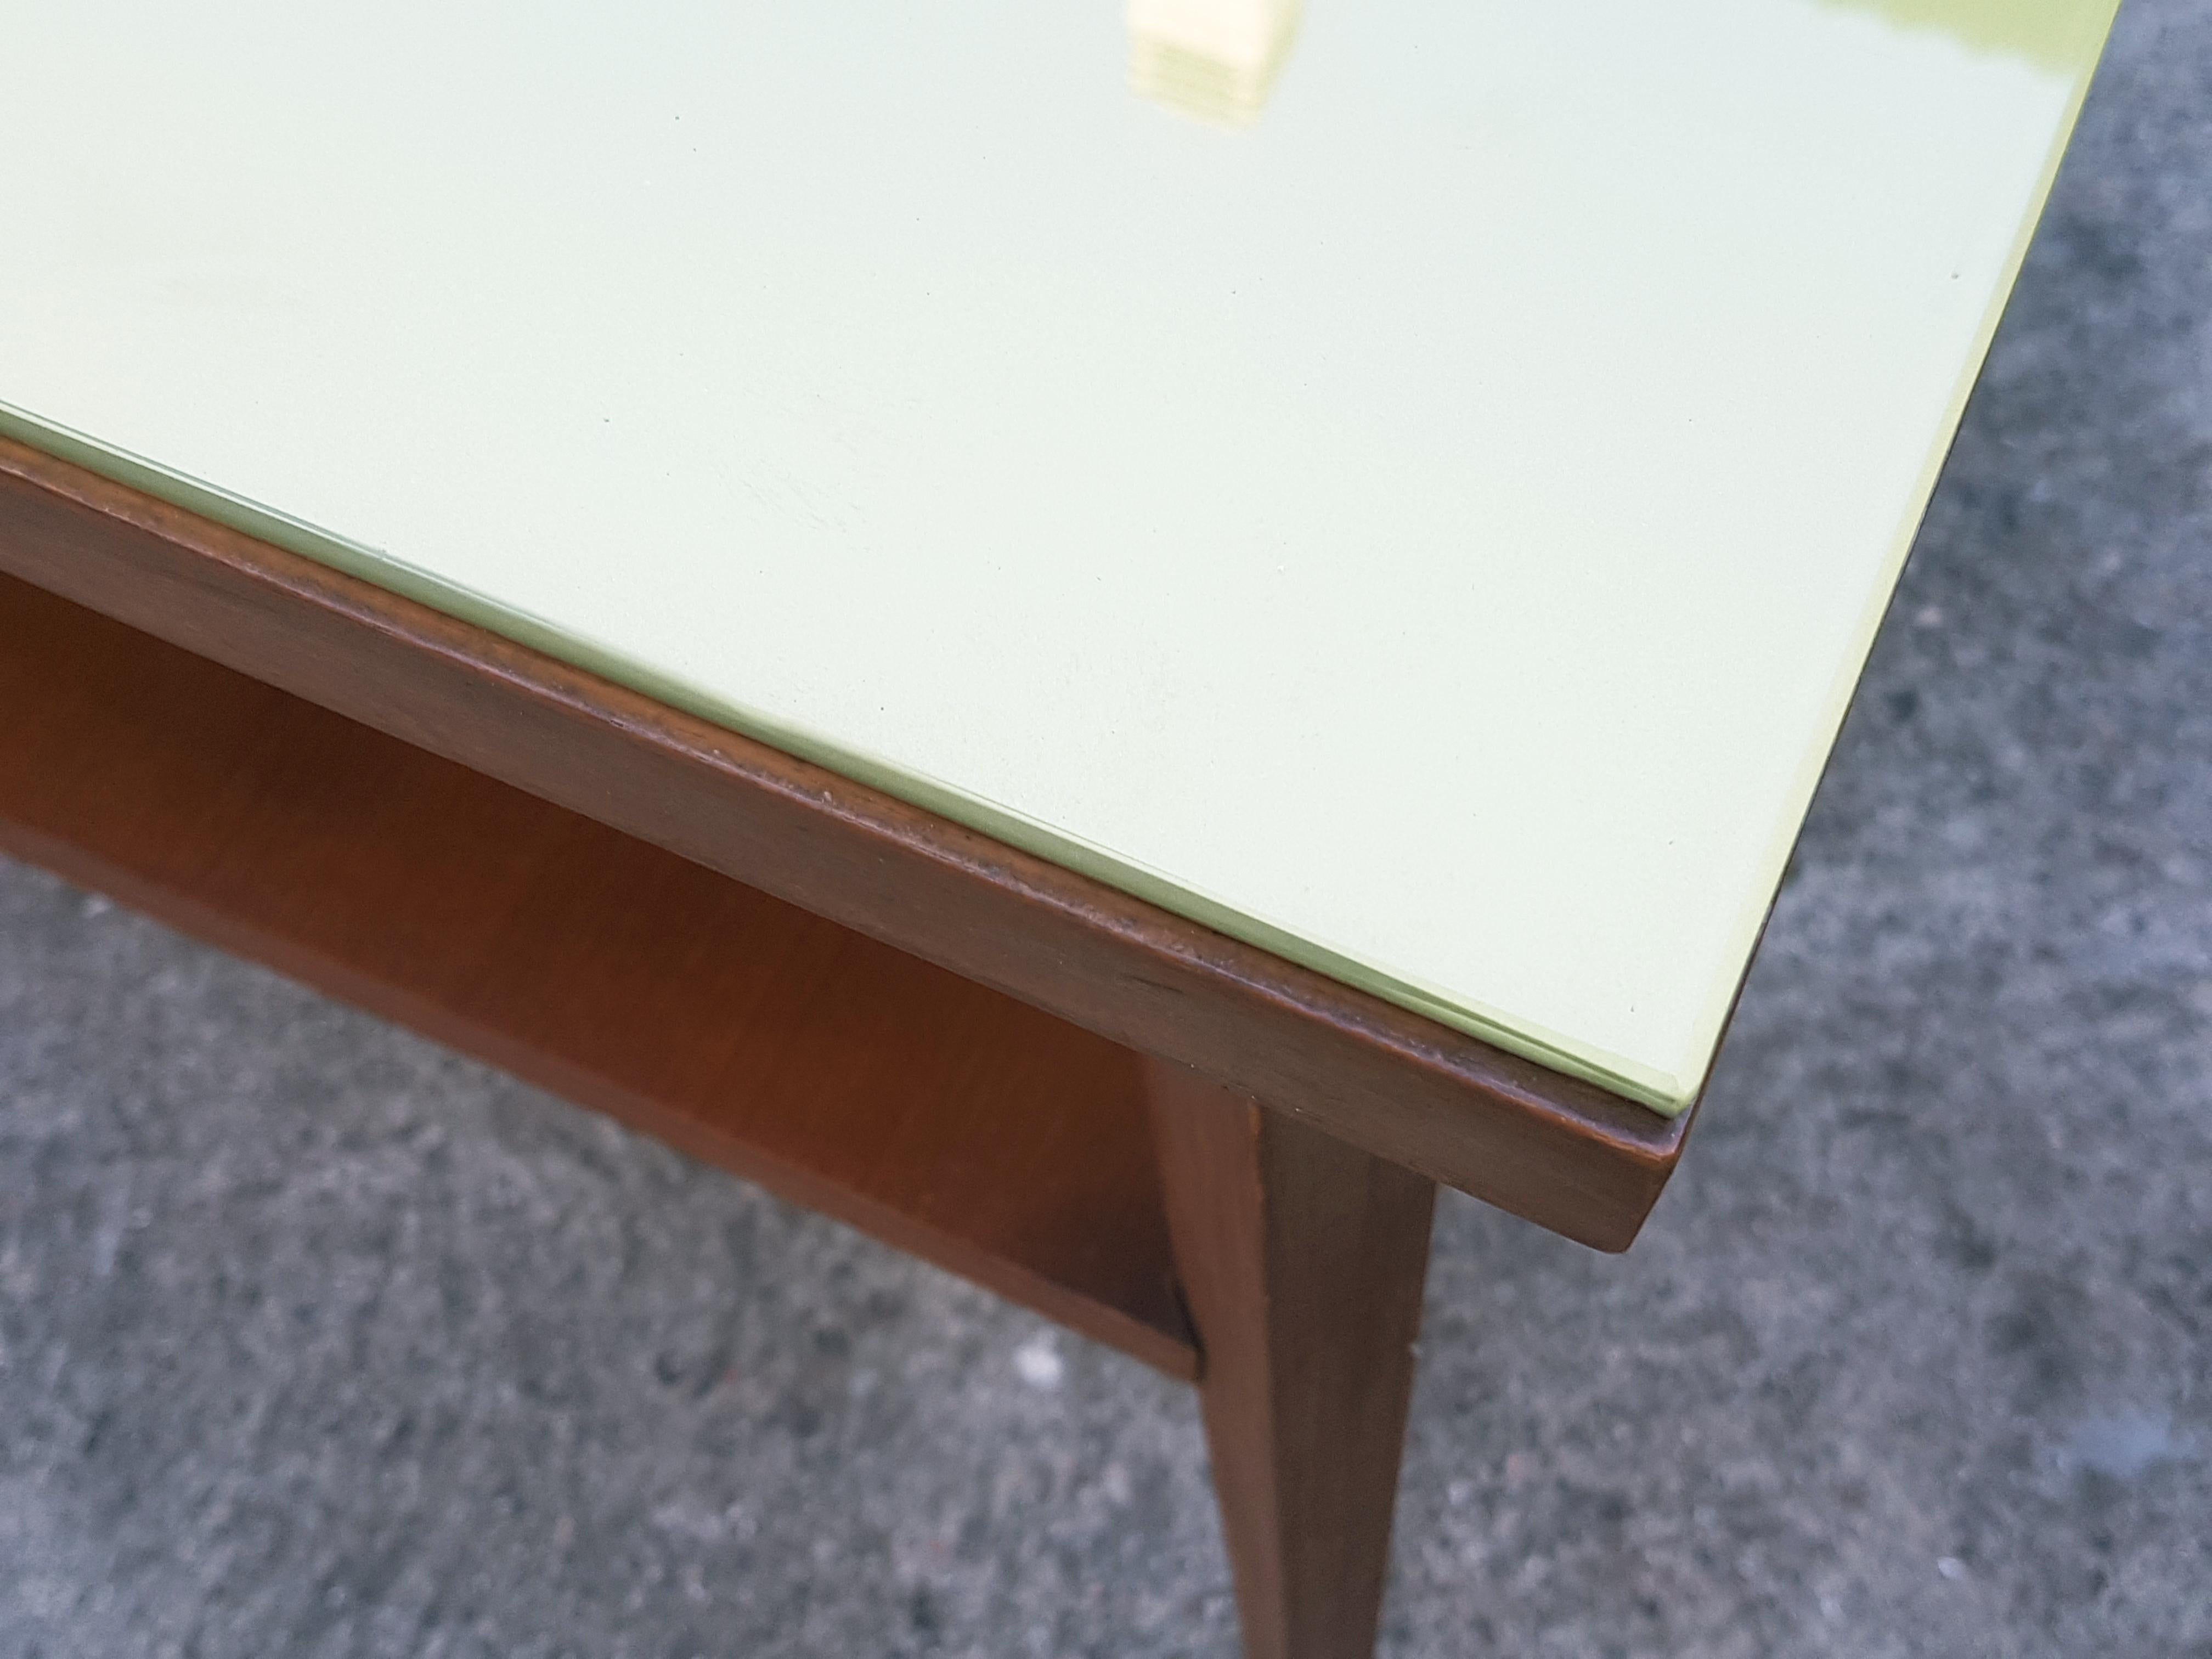  Vintage Italian Teak Wood & green glass 1960s Coffee Table For Sale 3